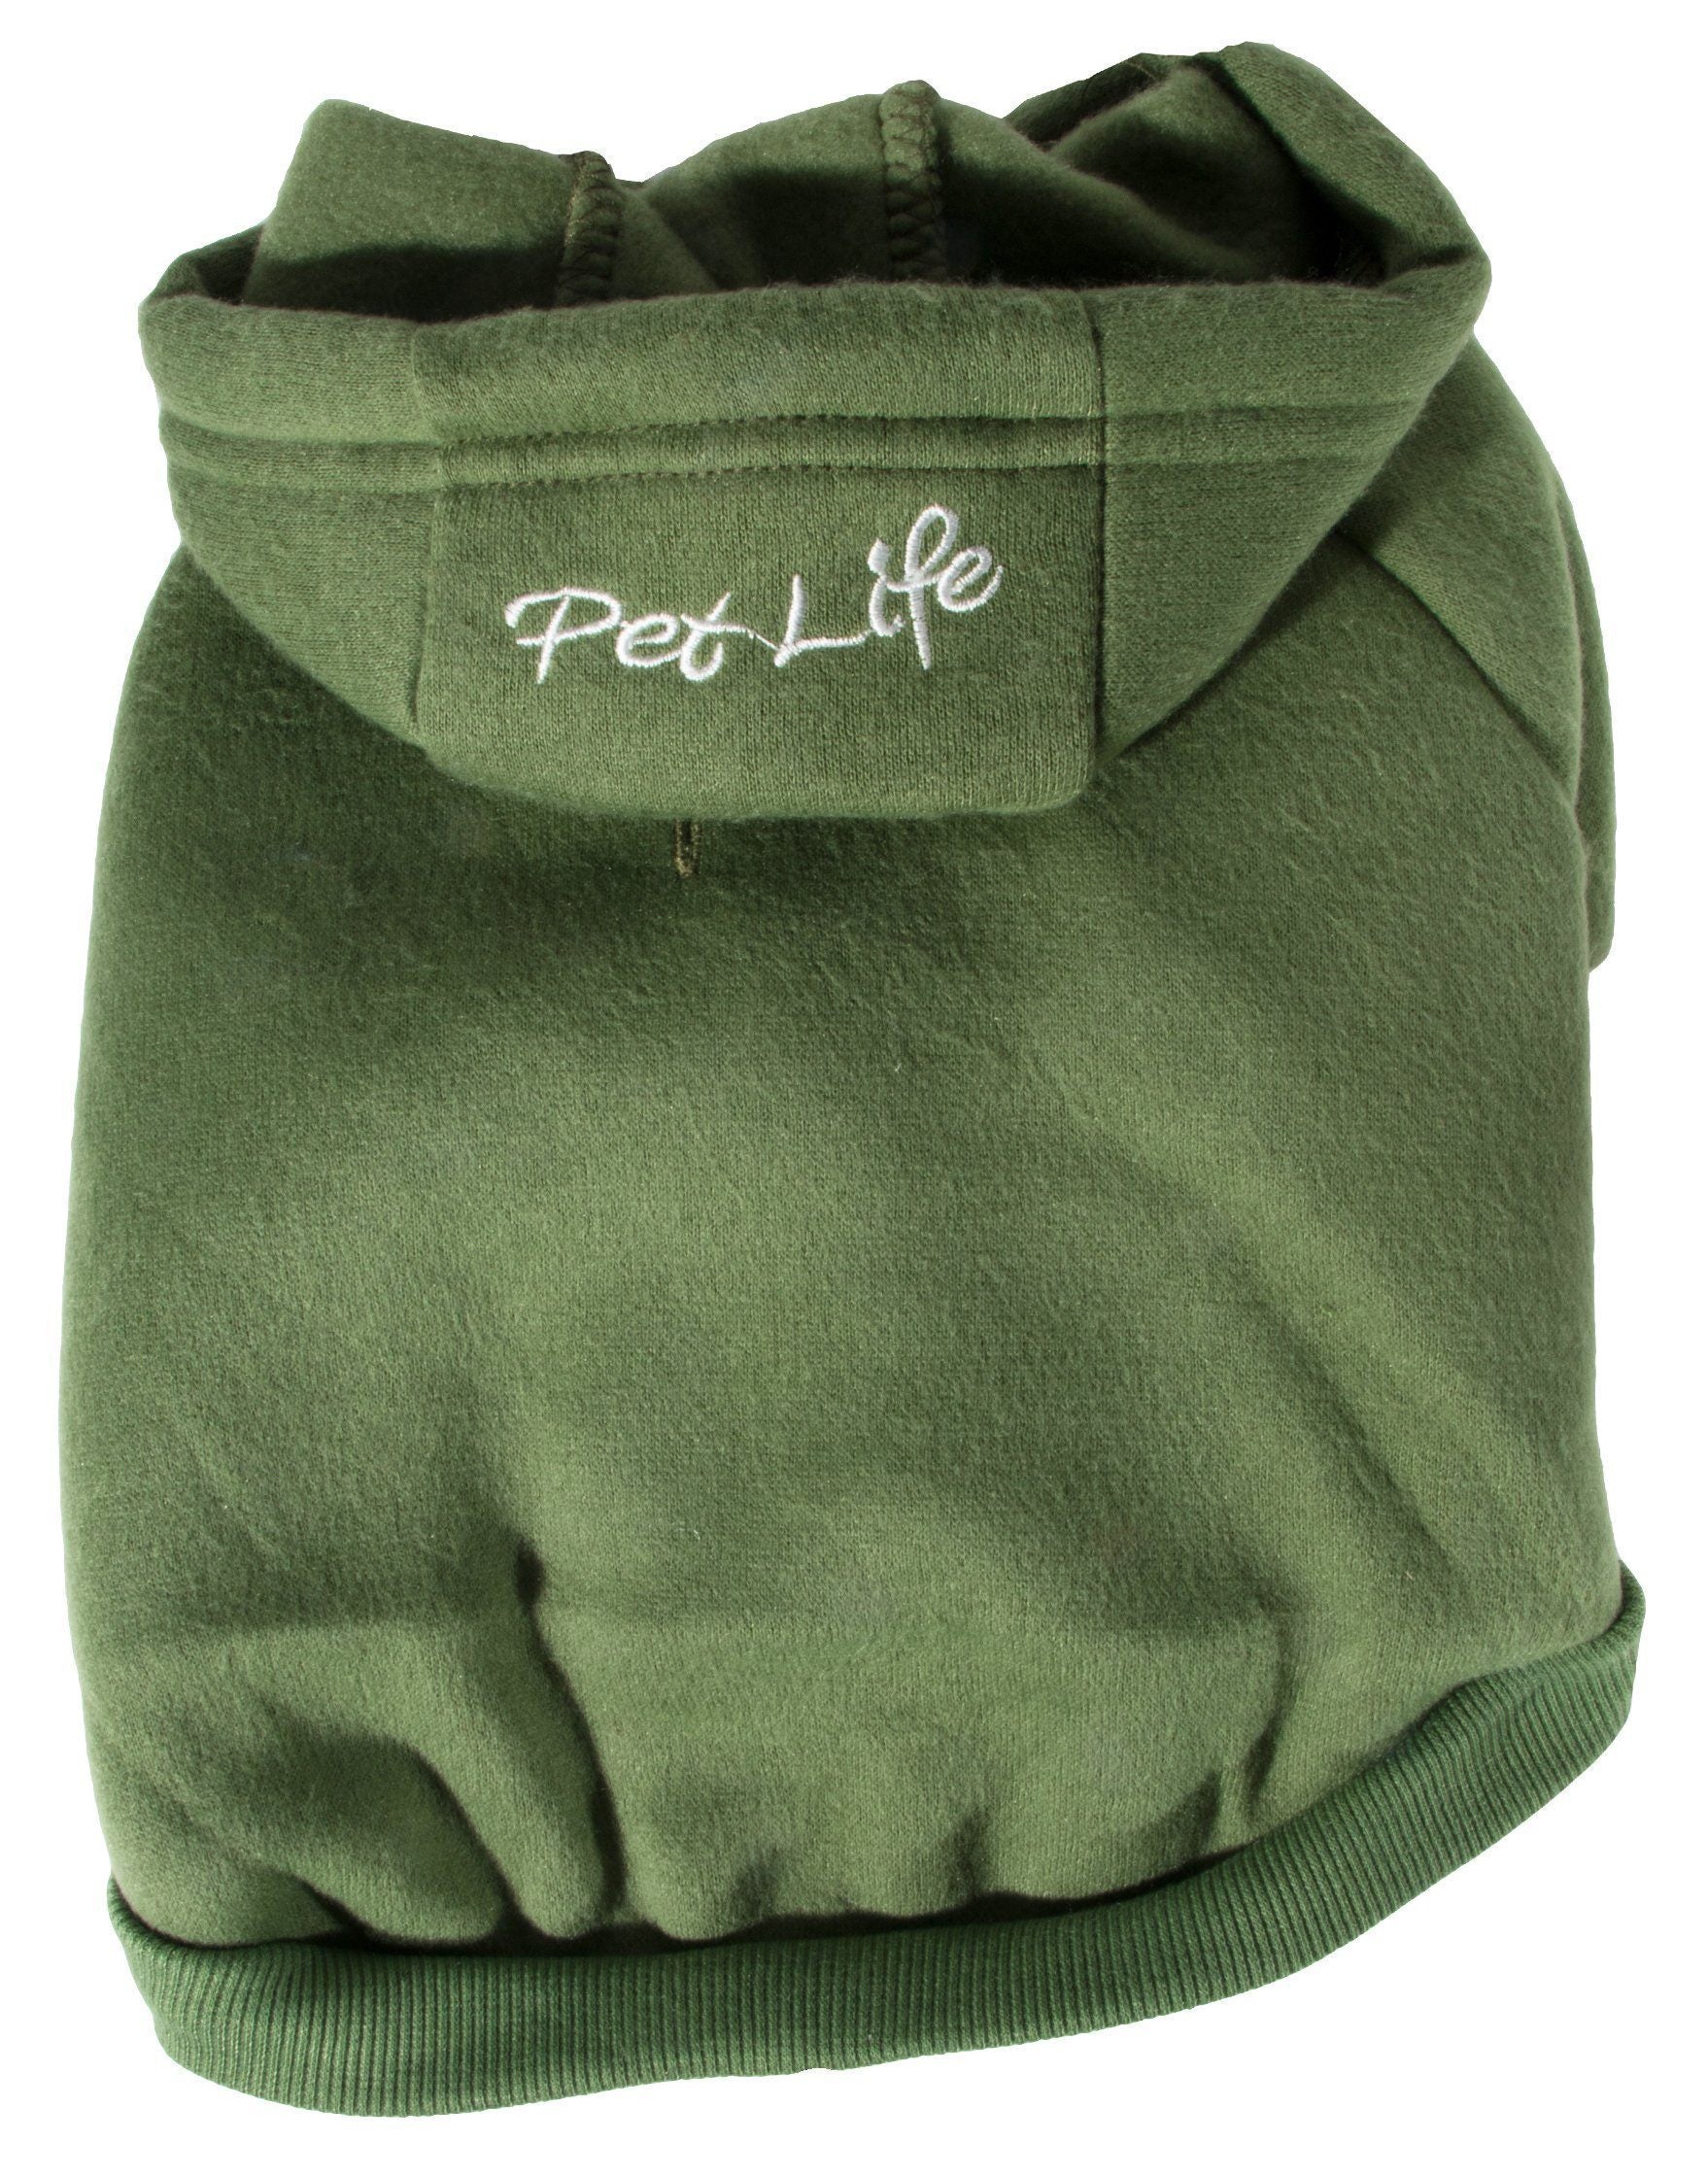 Pet Life ® 'American Classic' Fashion Plush Cotton Hooded Dog Sweater  